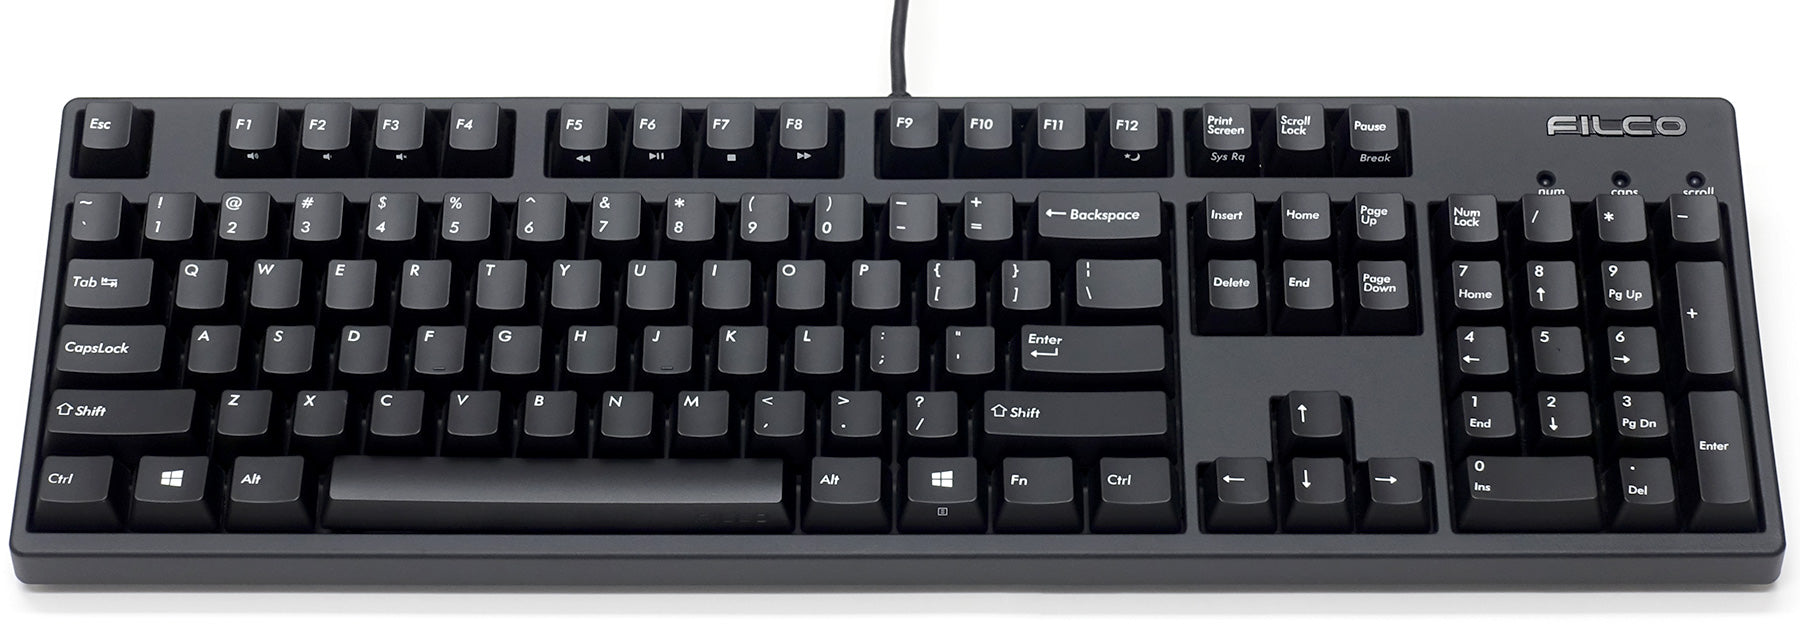 Filco Keyboards